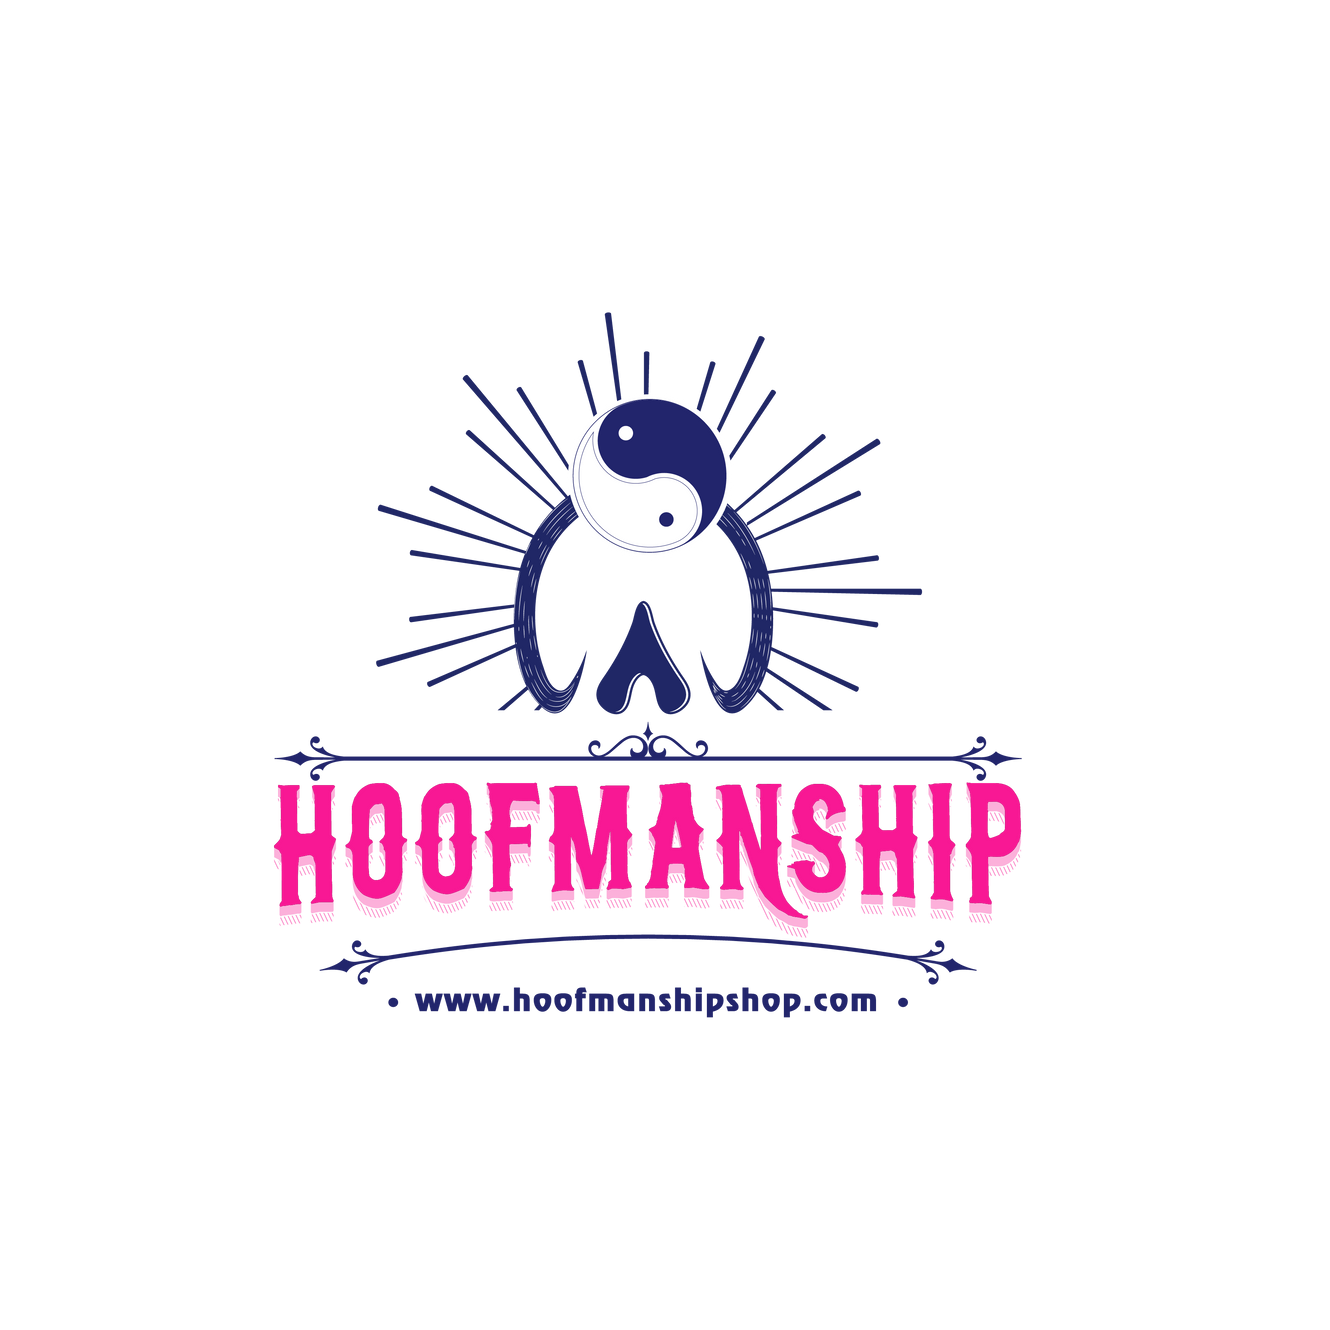 www.hoofmanshipshop.com